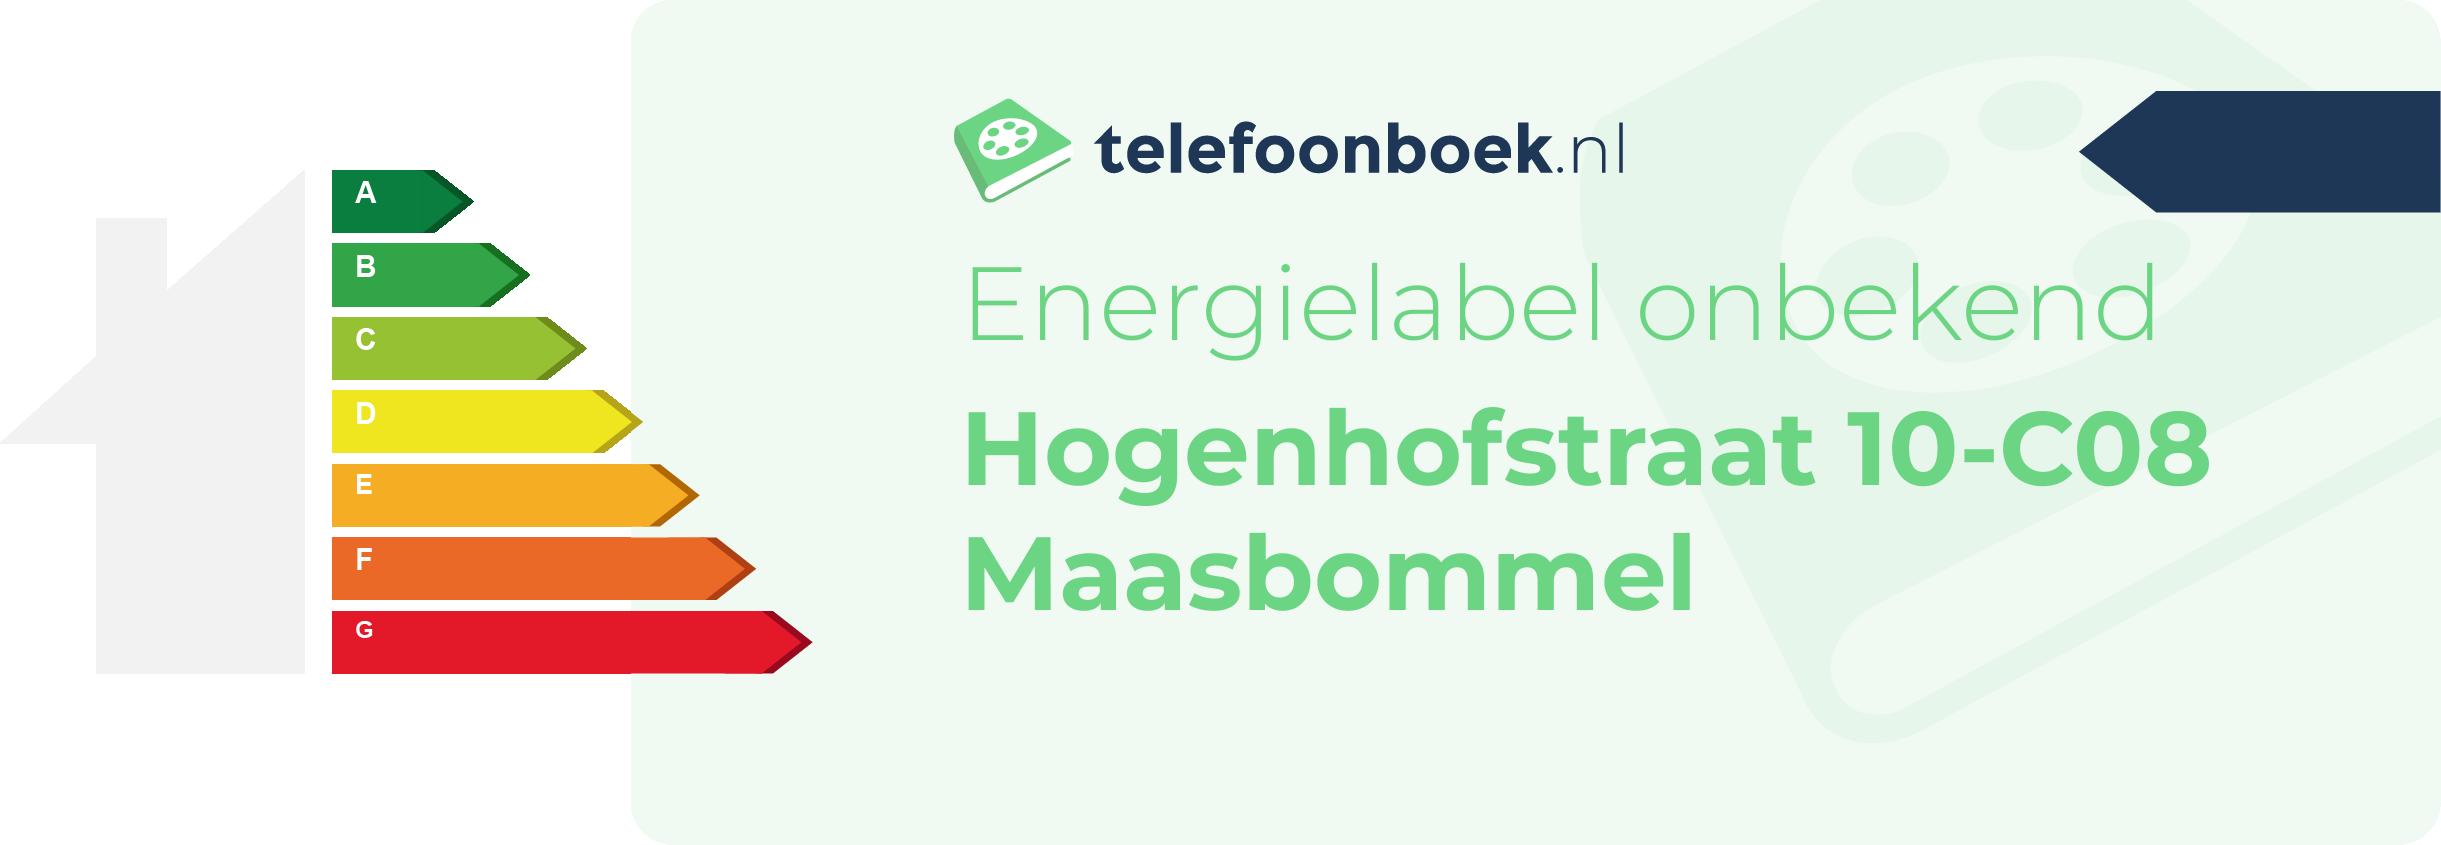 Energielabel Hogenhofstraat 10-C08 Maasbommel